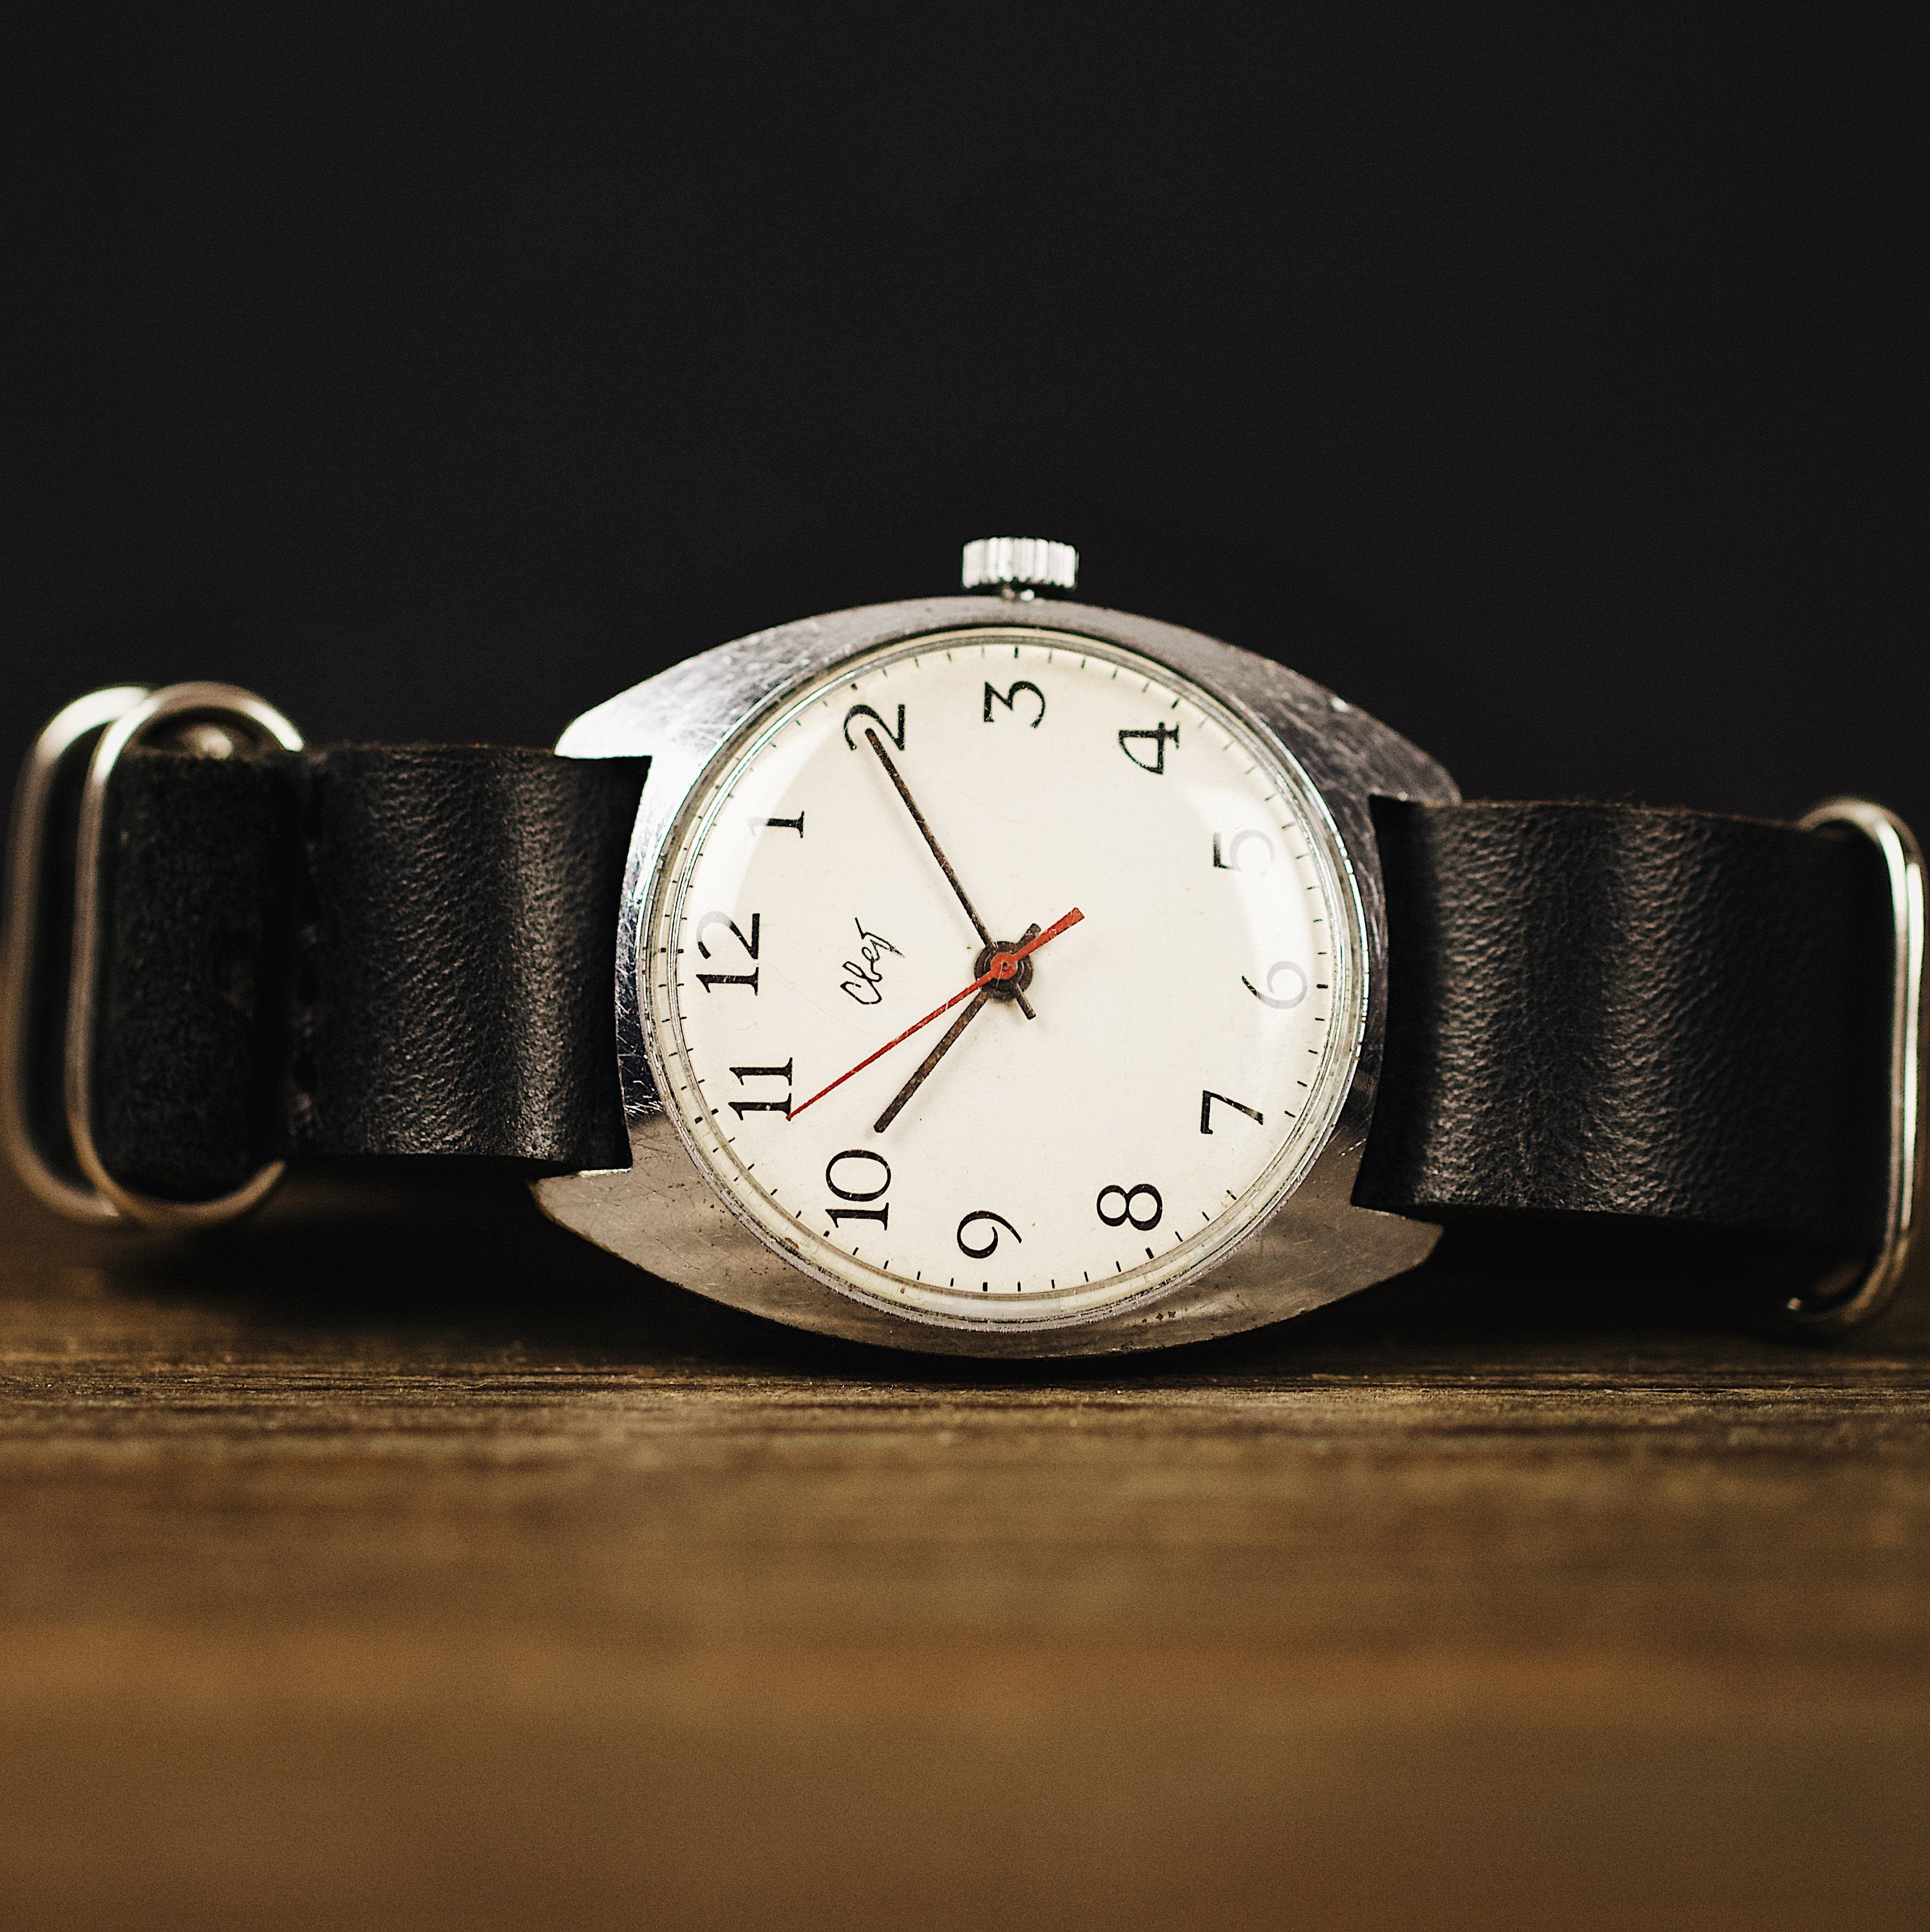 Very rare soviet vintage unisex wrist watch Svet with leather nato strap